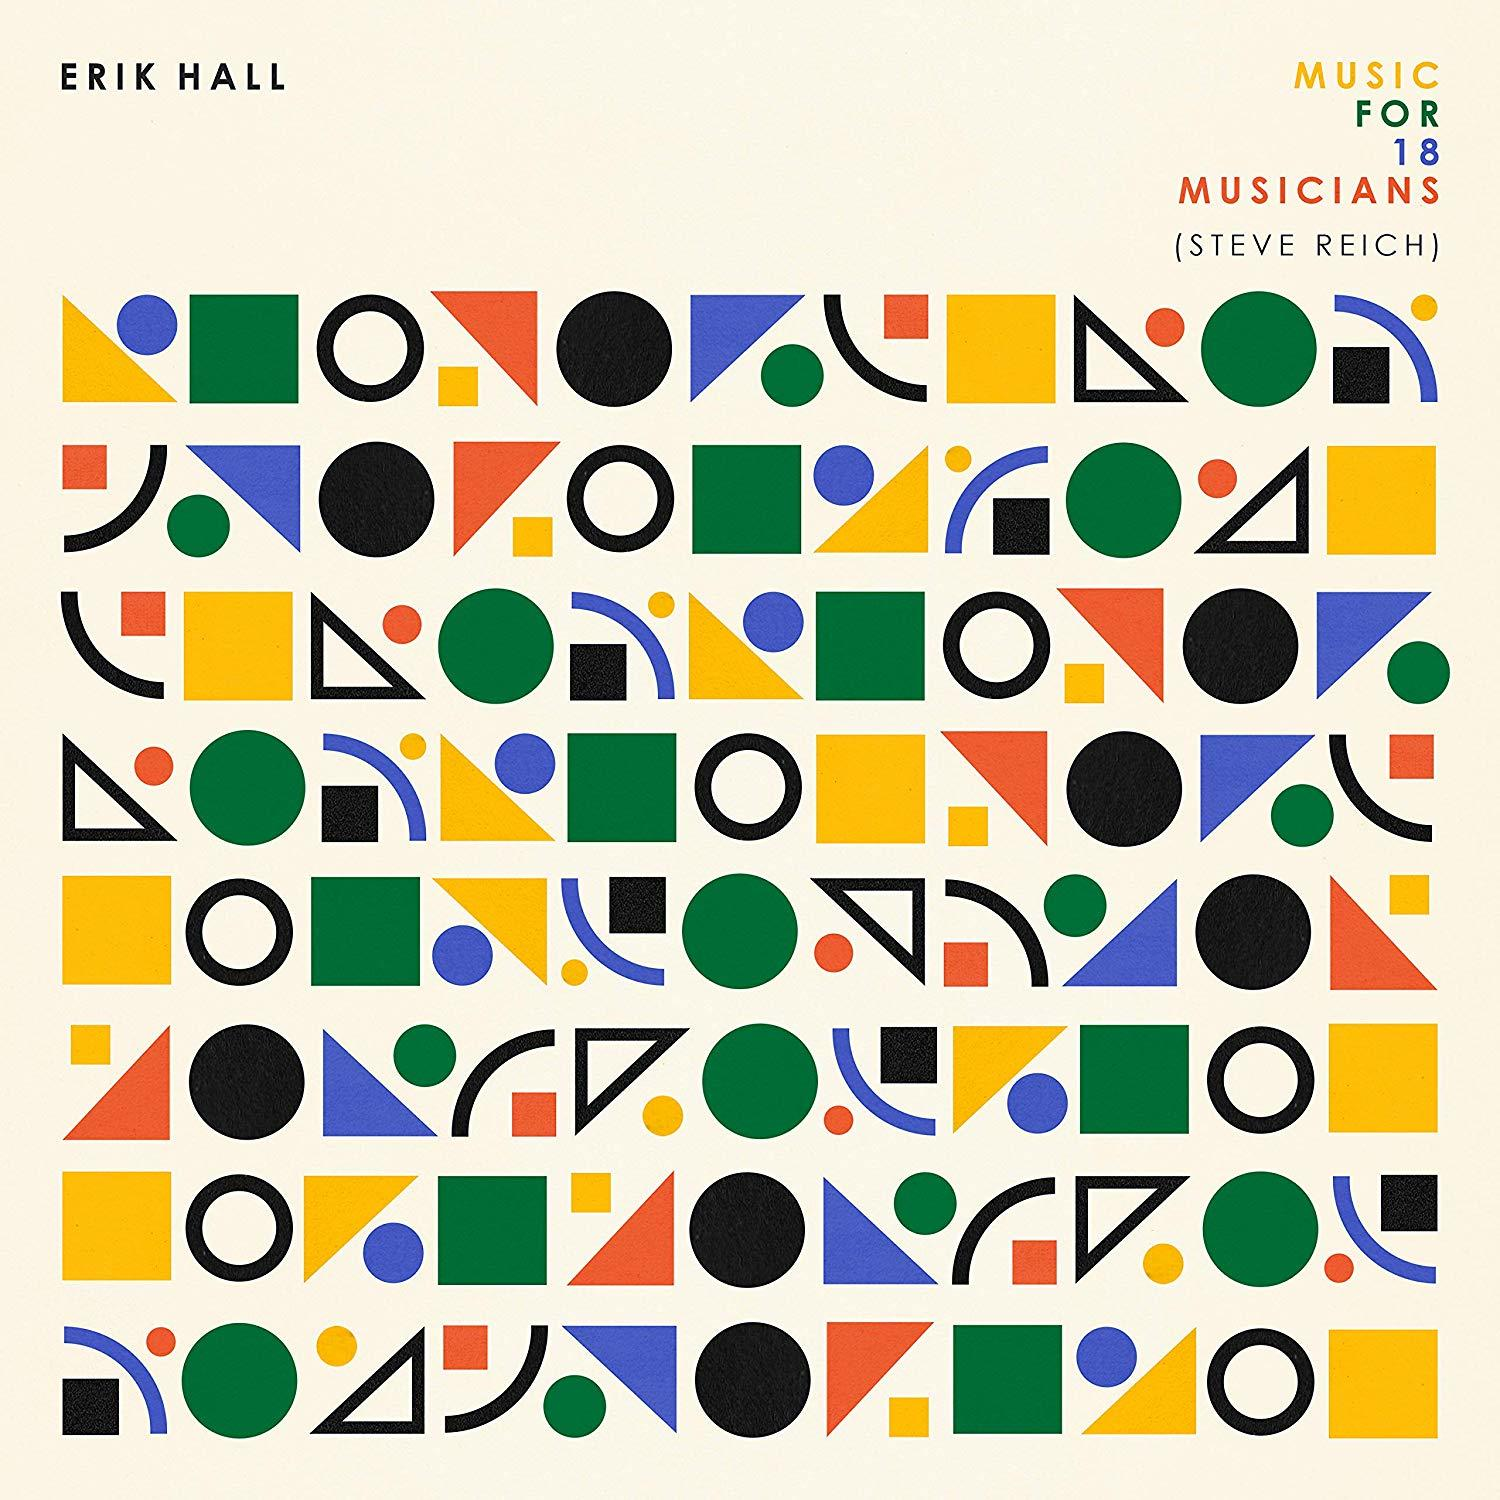 Erik Hall - MUSIC MUSICIANS - FOR 18 REICH) (STEVE (Vinyl)